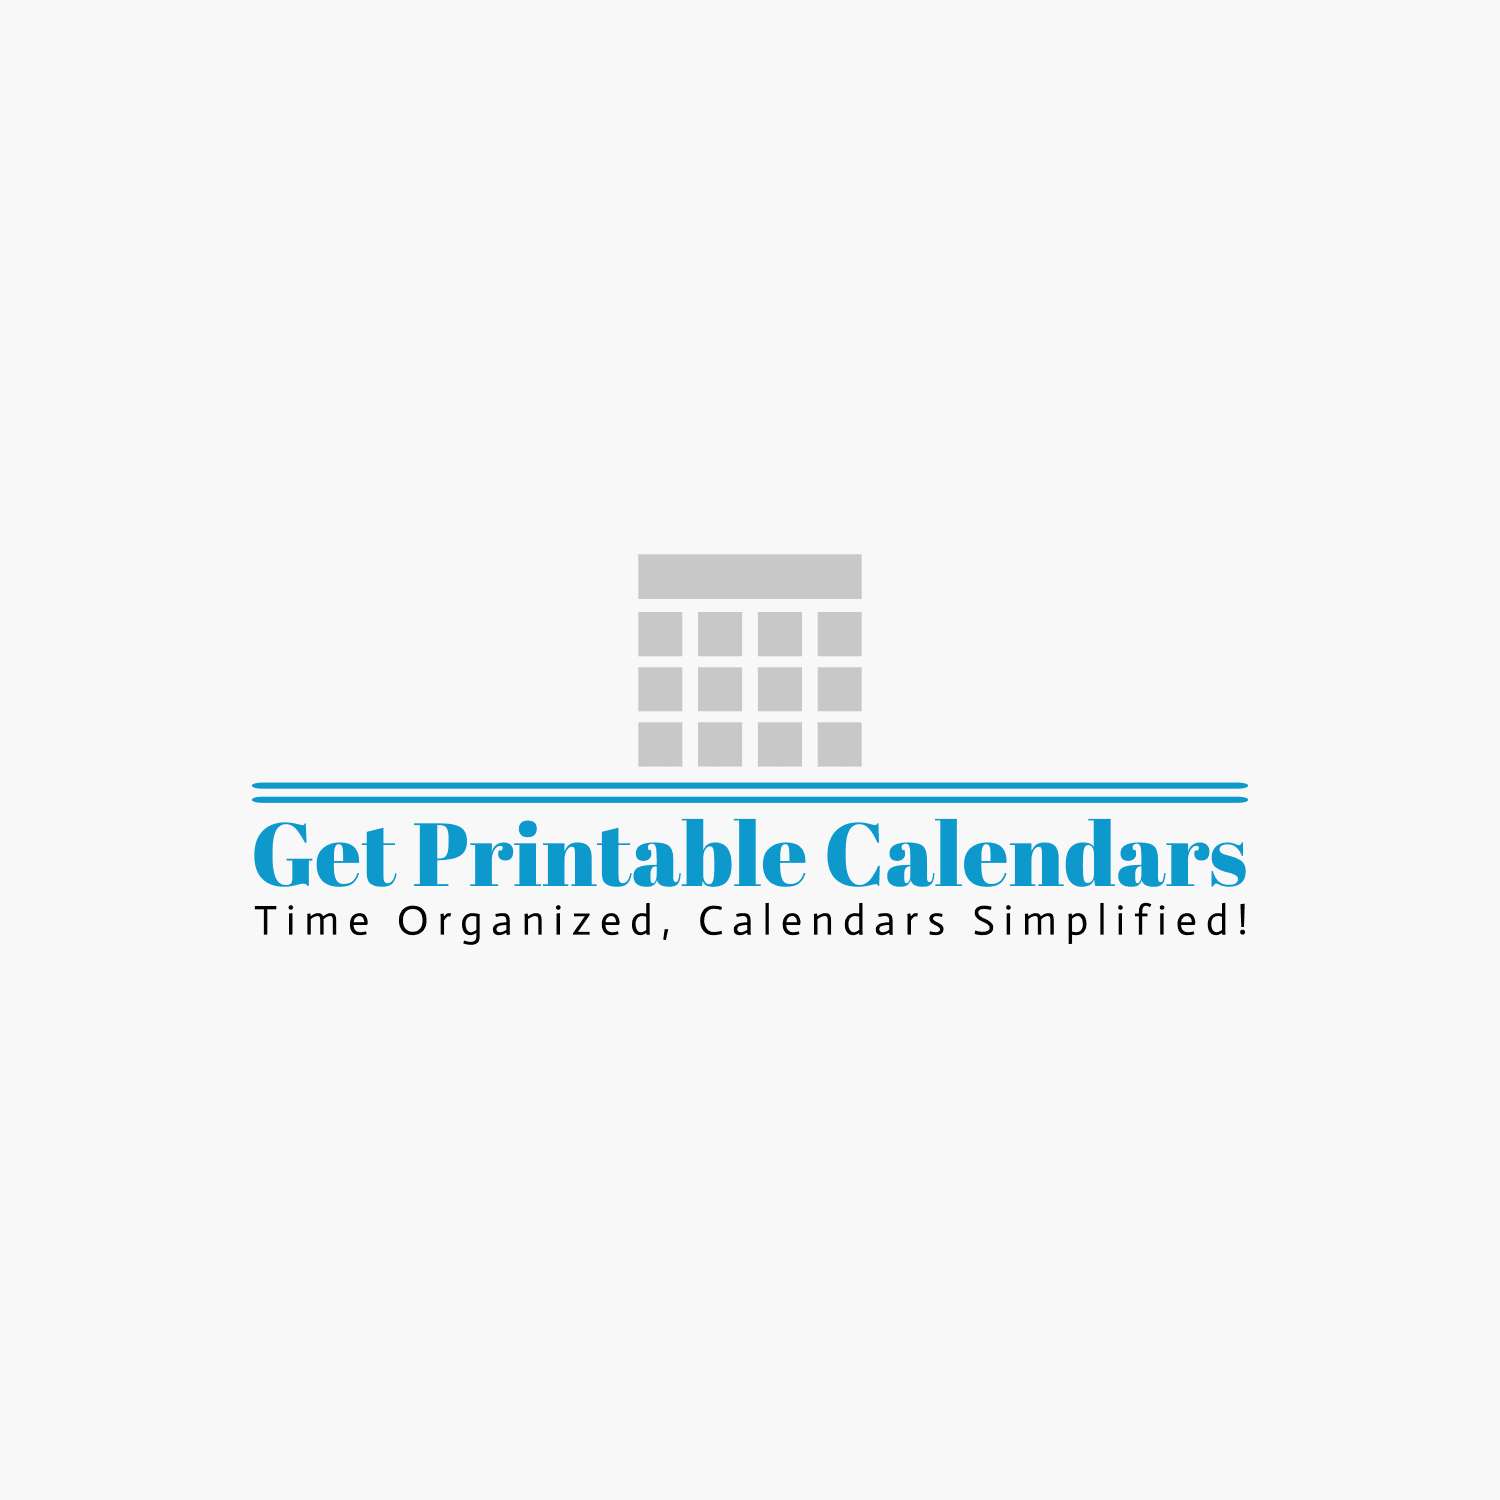 Get Printable Calendars